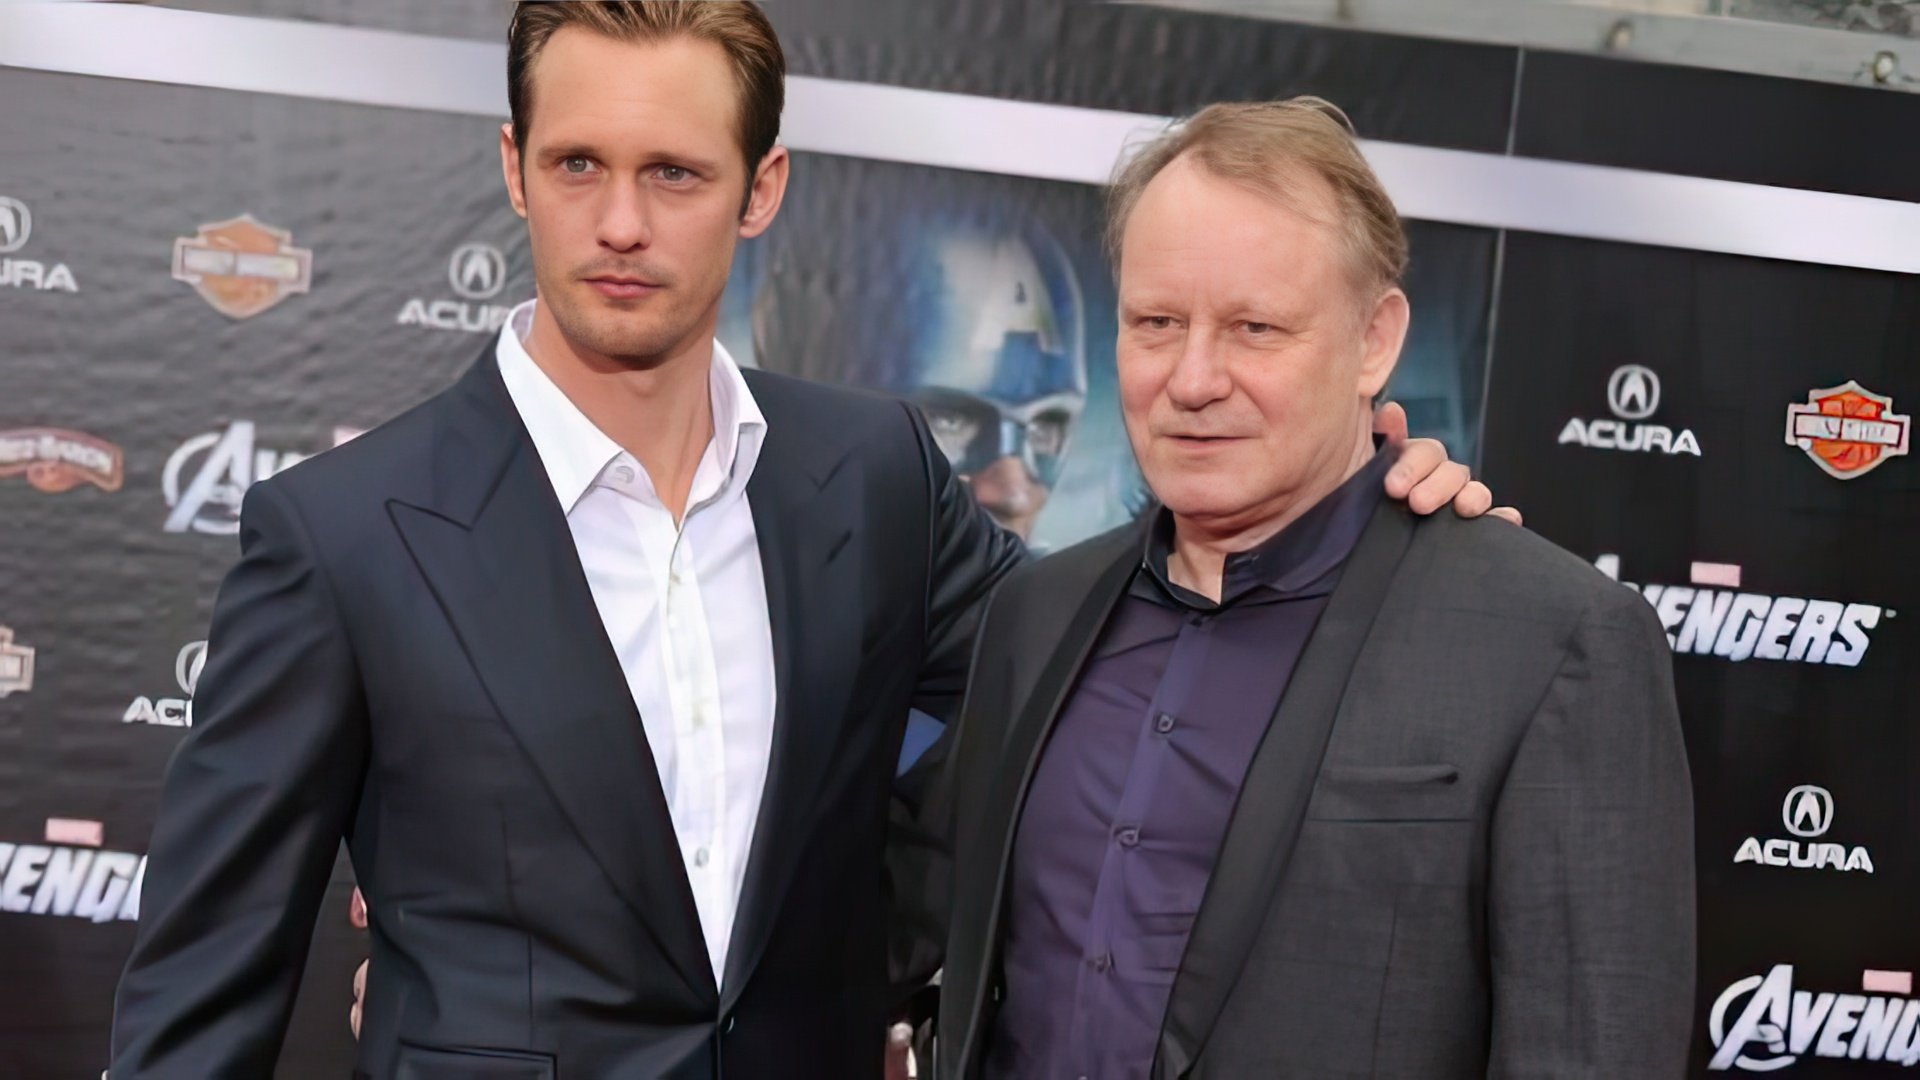 Alexander’s father, Stellan Skarsgård, is the great Swedish actor